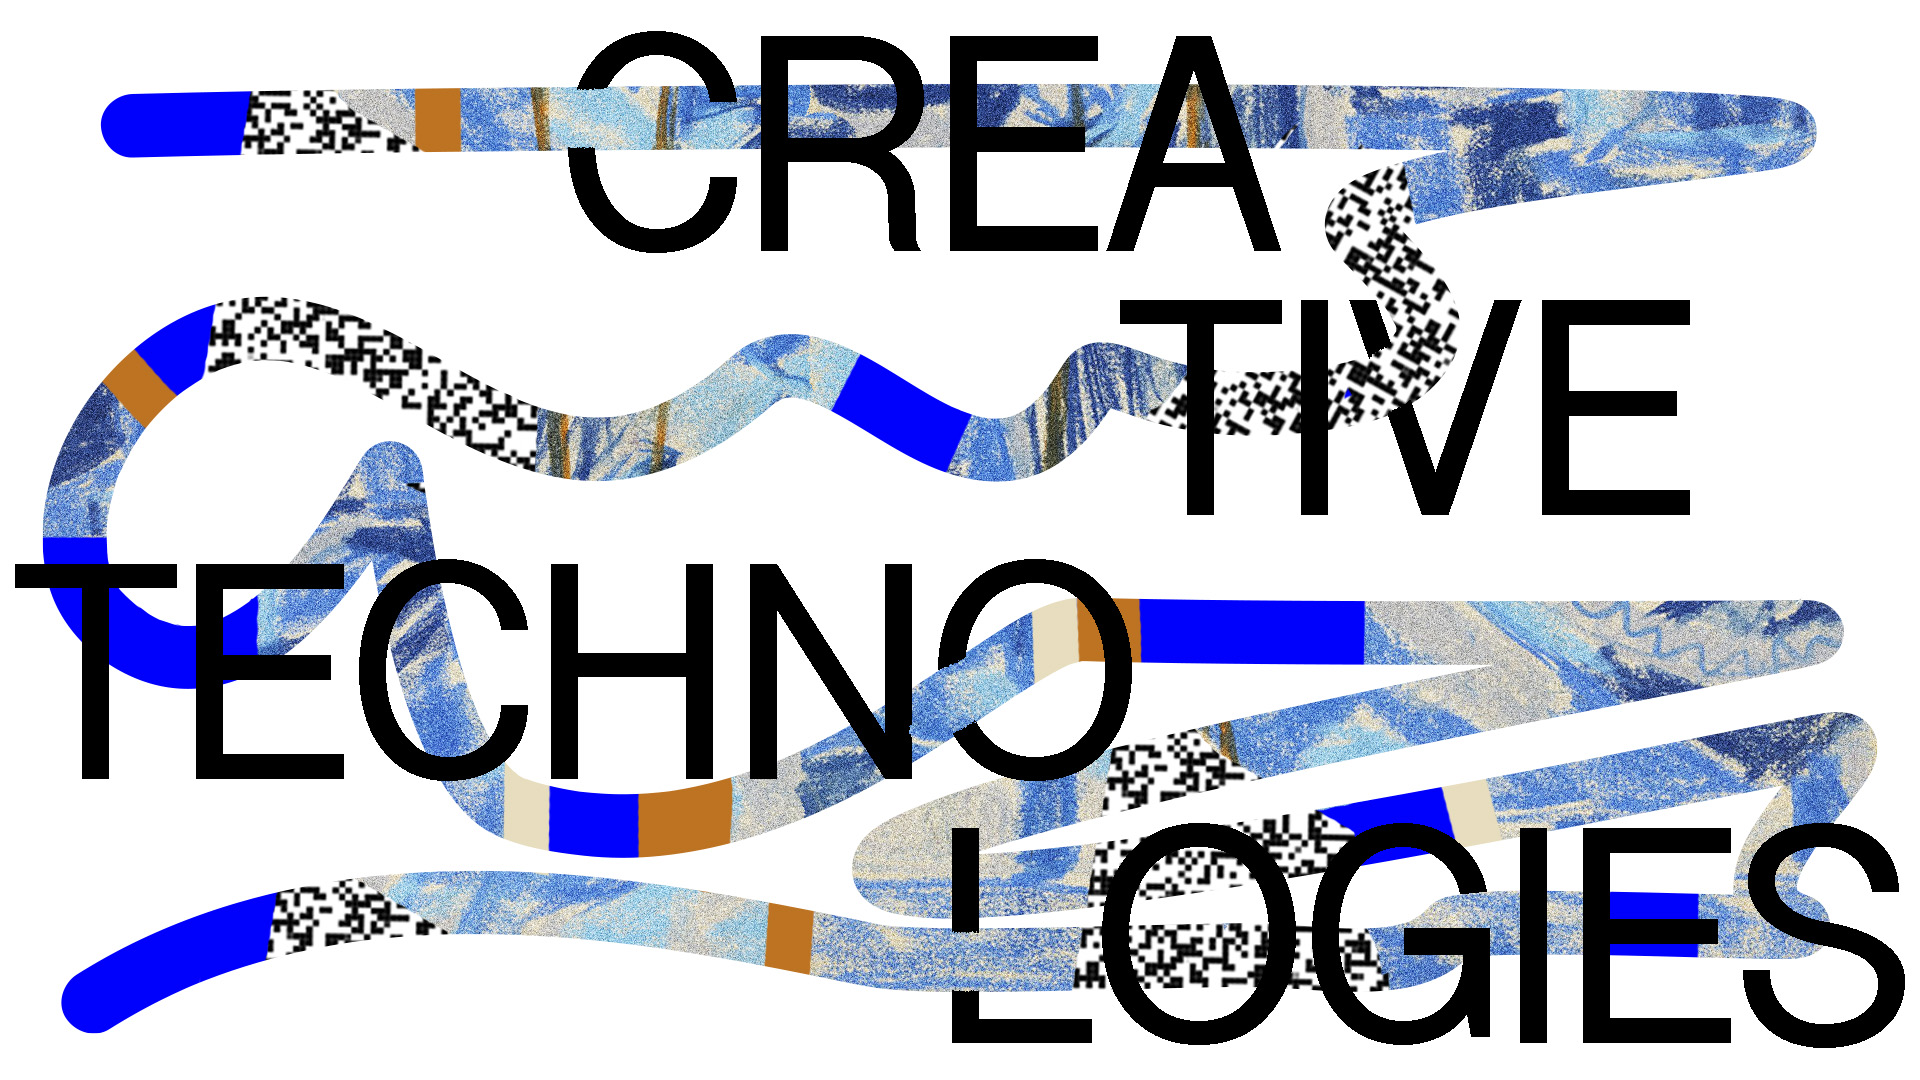 Creative technologies website title image